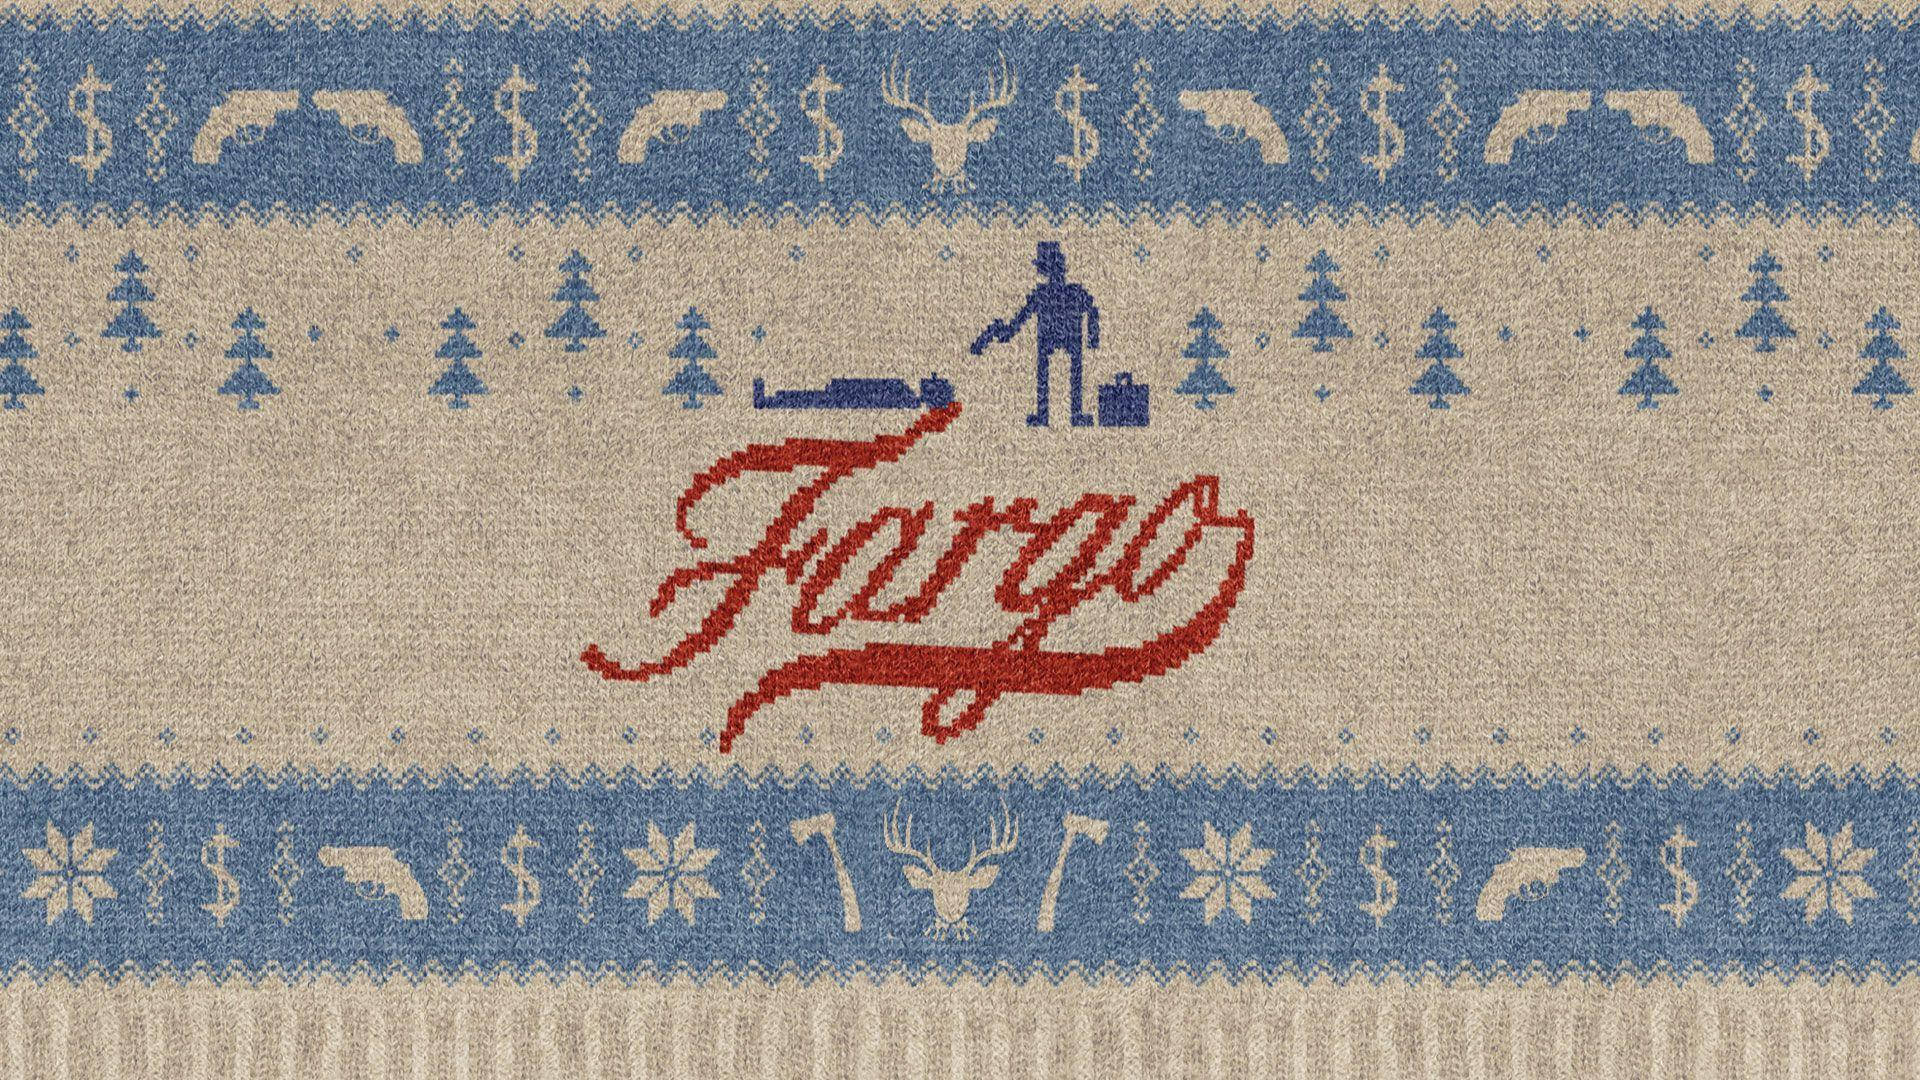 Fargo Series Poster Wallpaper